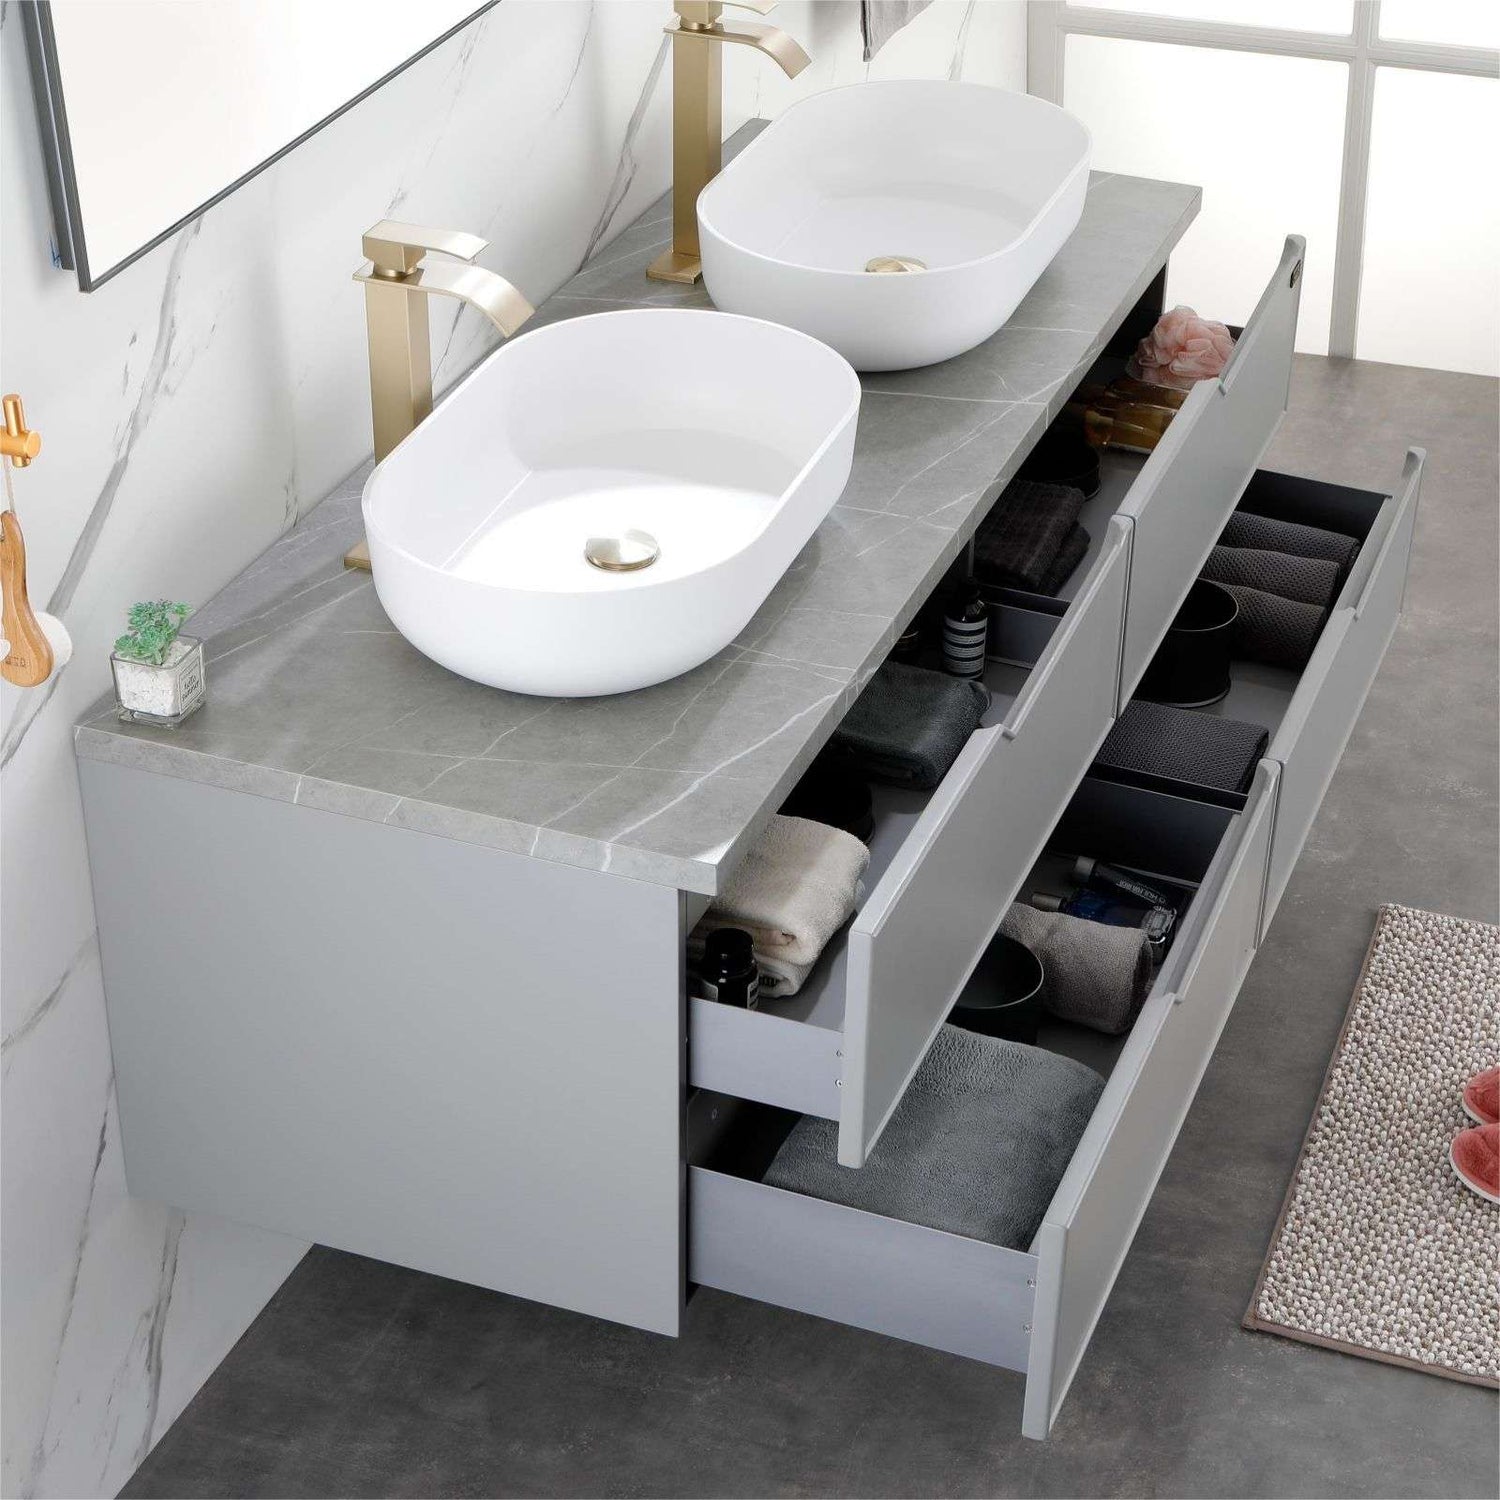 White Oval Above Bathroom Vessel Sink for Vanity